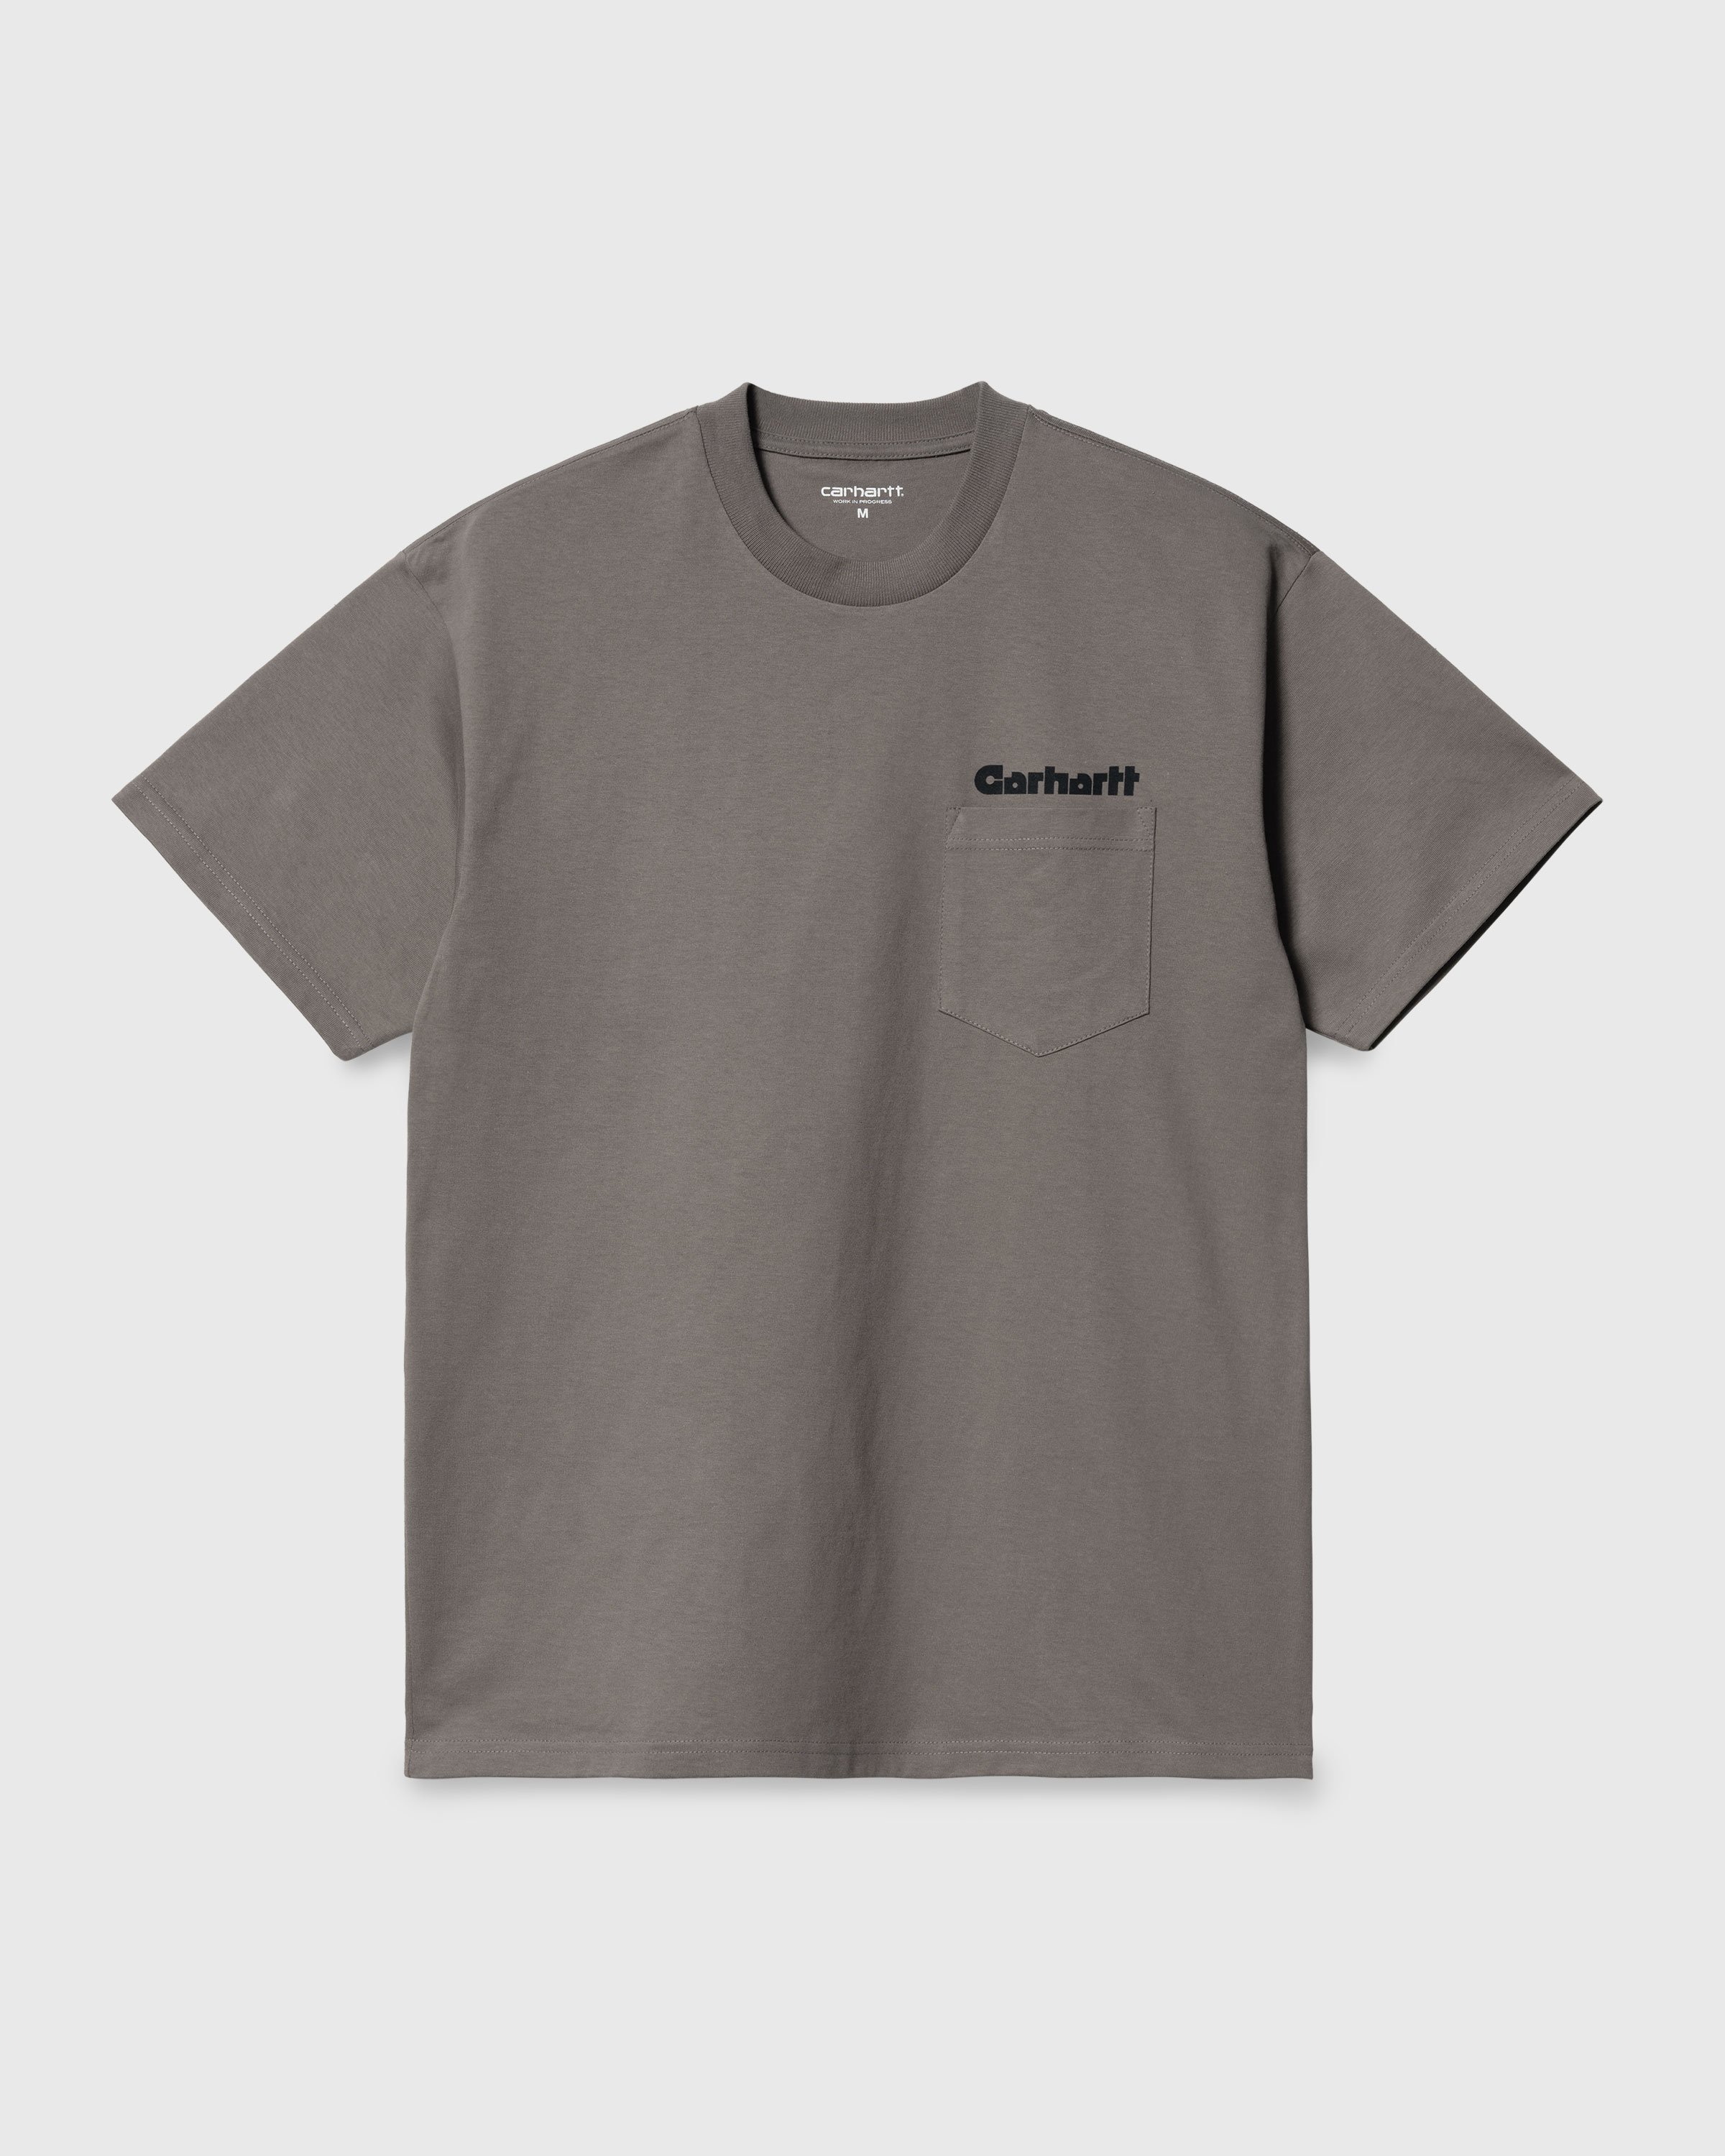 Carhartt WIP - Innovation Pocket T-Shirt Teide - Clothing - Green - Image 2